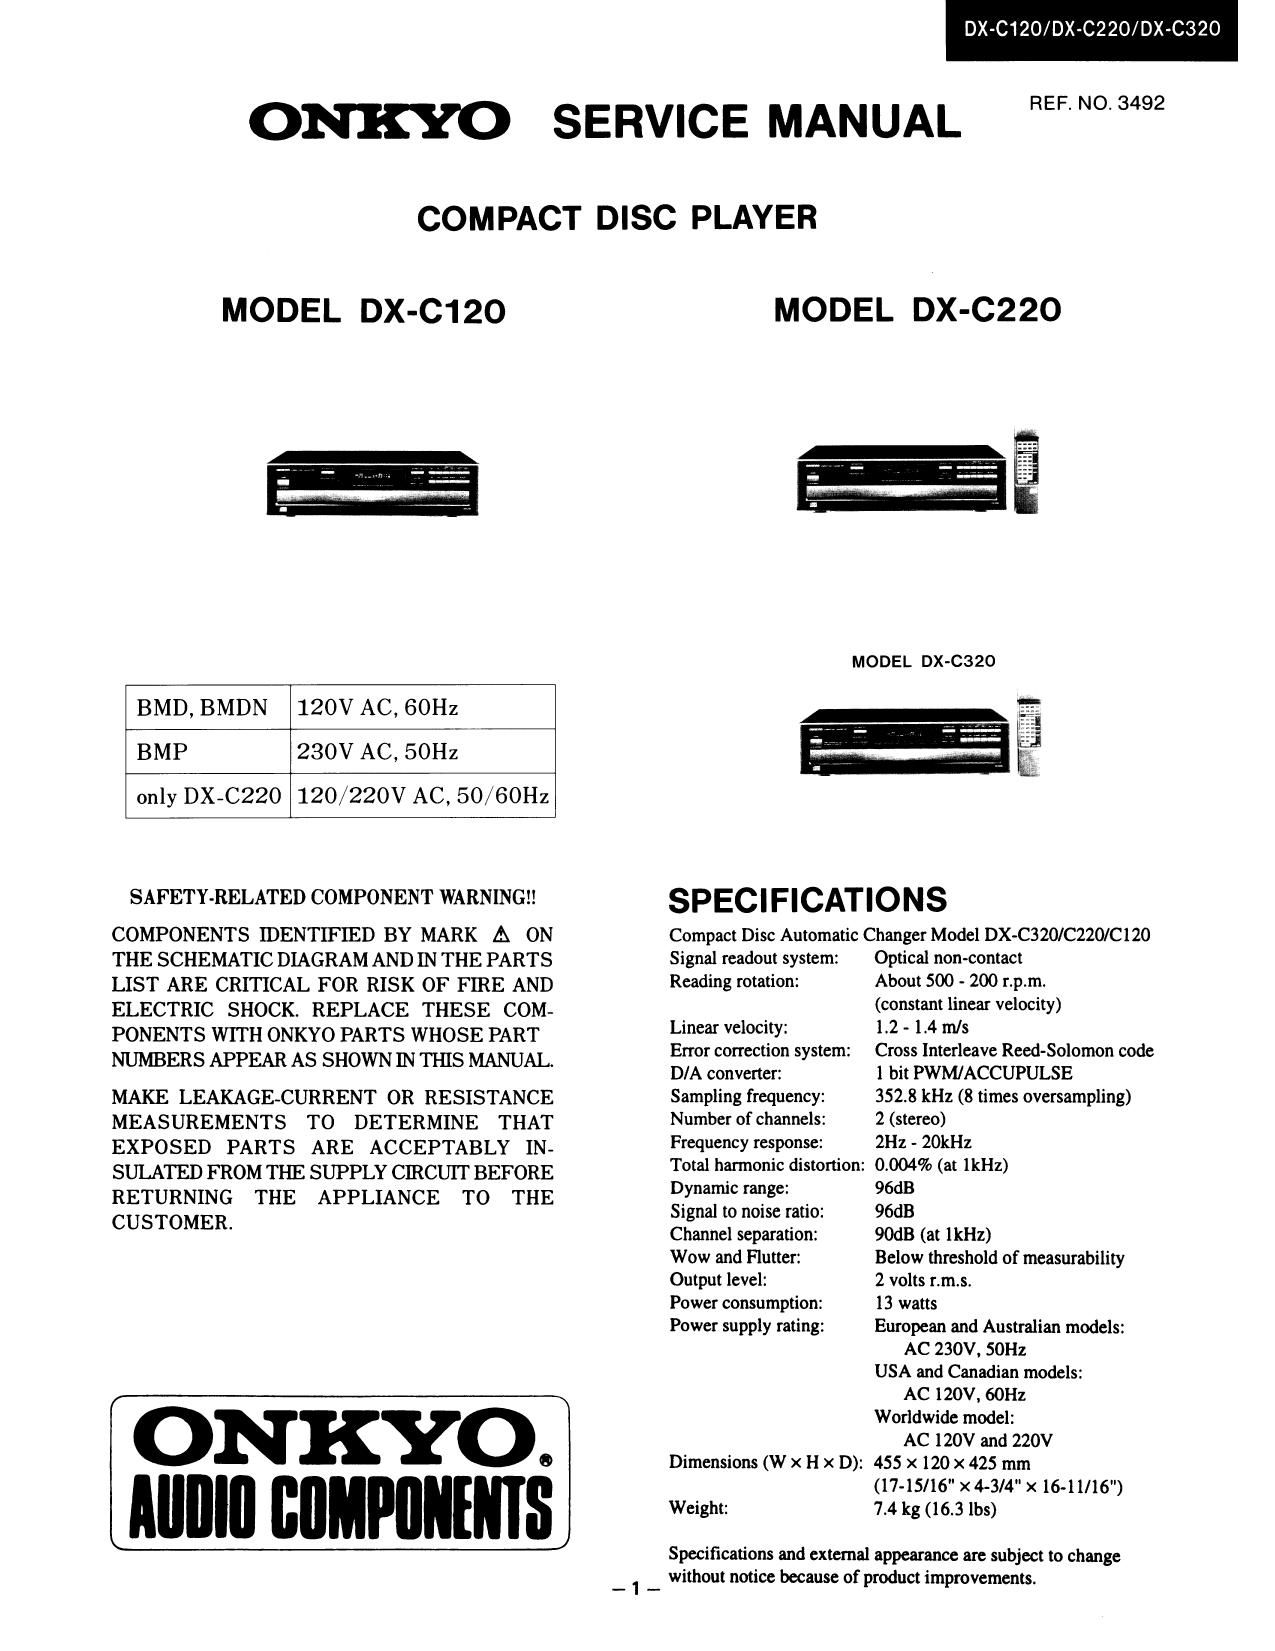 Onkyo DXC 320 Service Manual